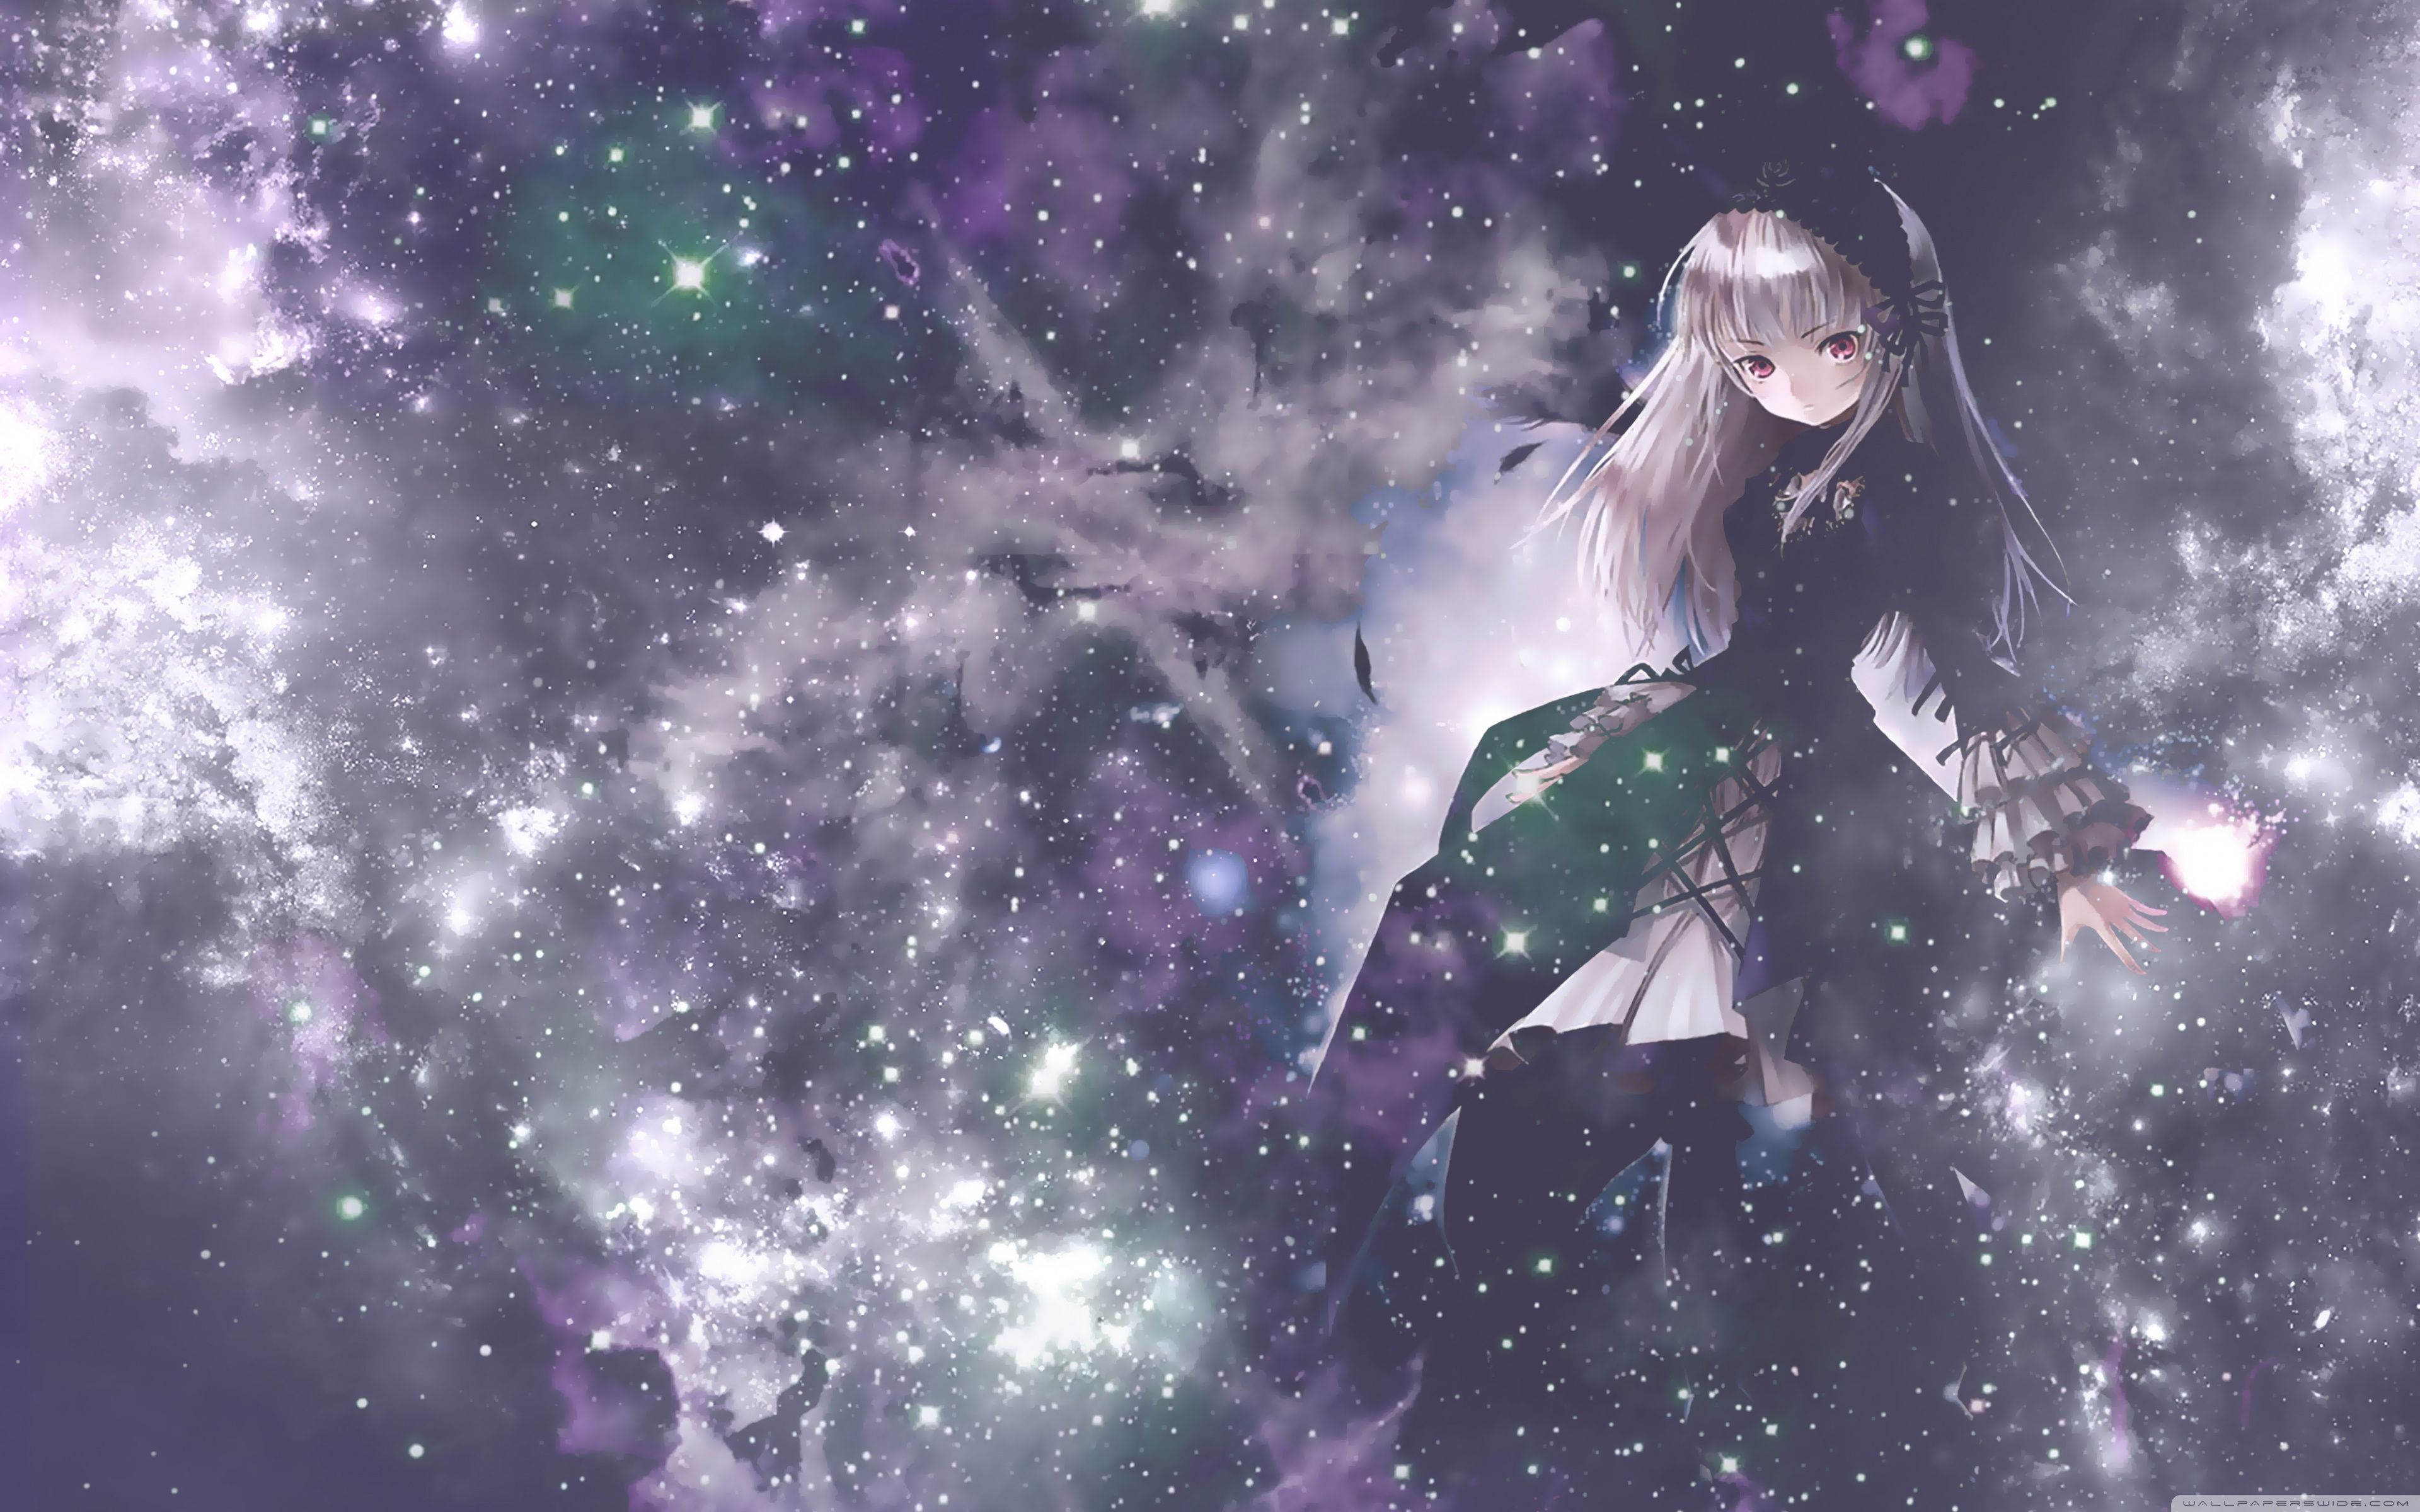 theme anime: Anime Wallpaper Galaxy